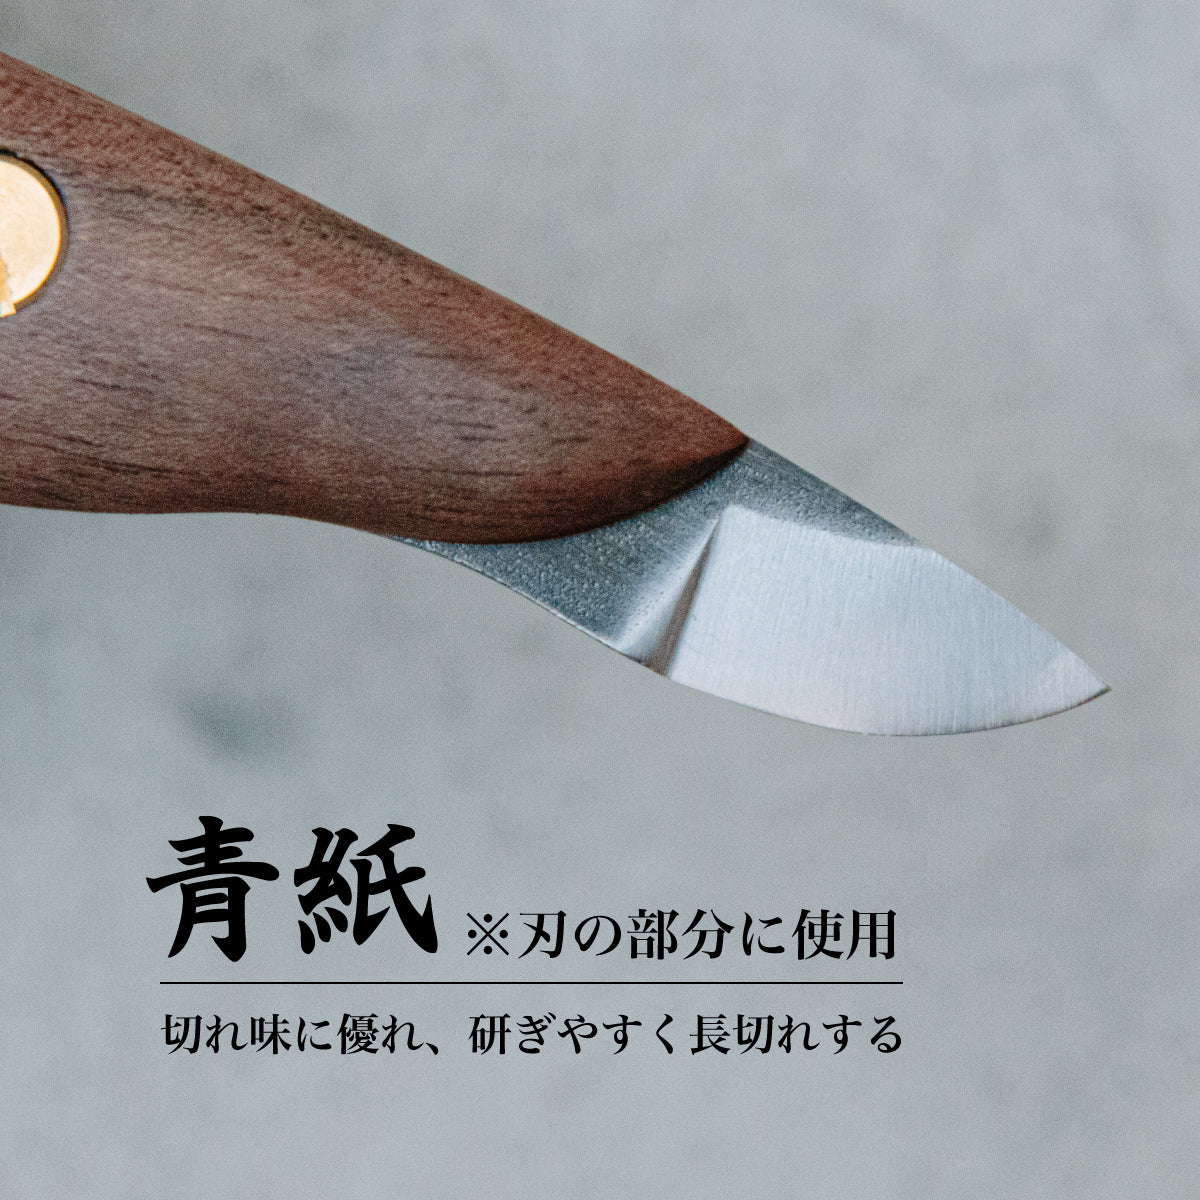 【NEW】レザークラフトナイフ マルチカラー